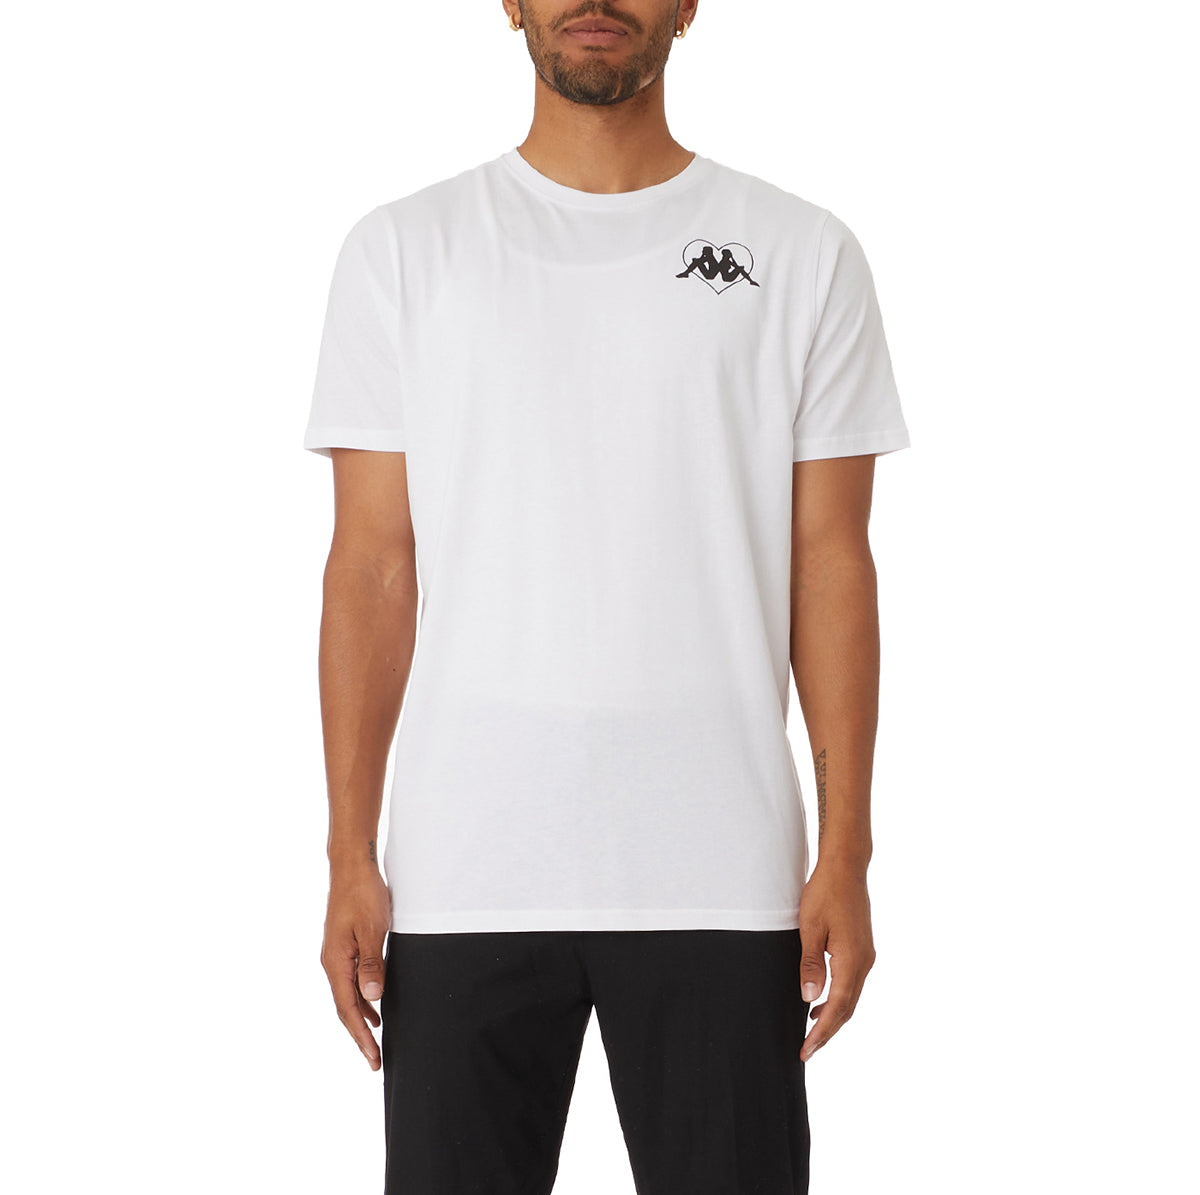 Camiseta Bytom blanco hombre - imagen 1